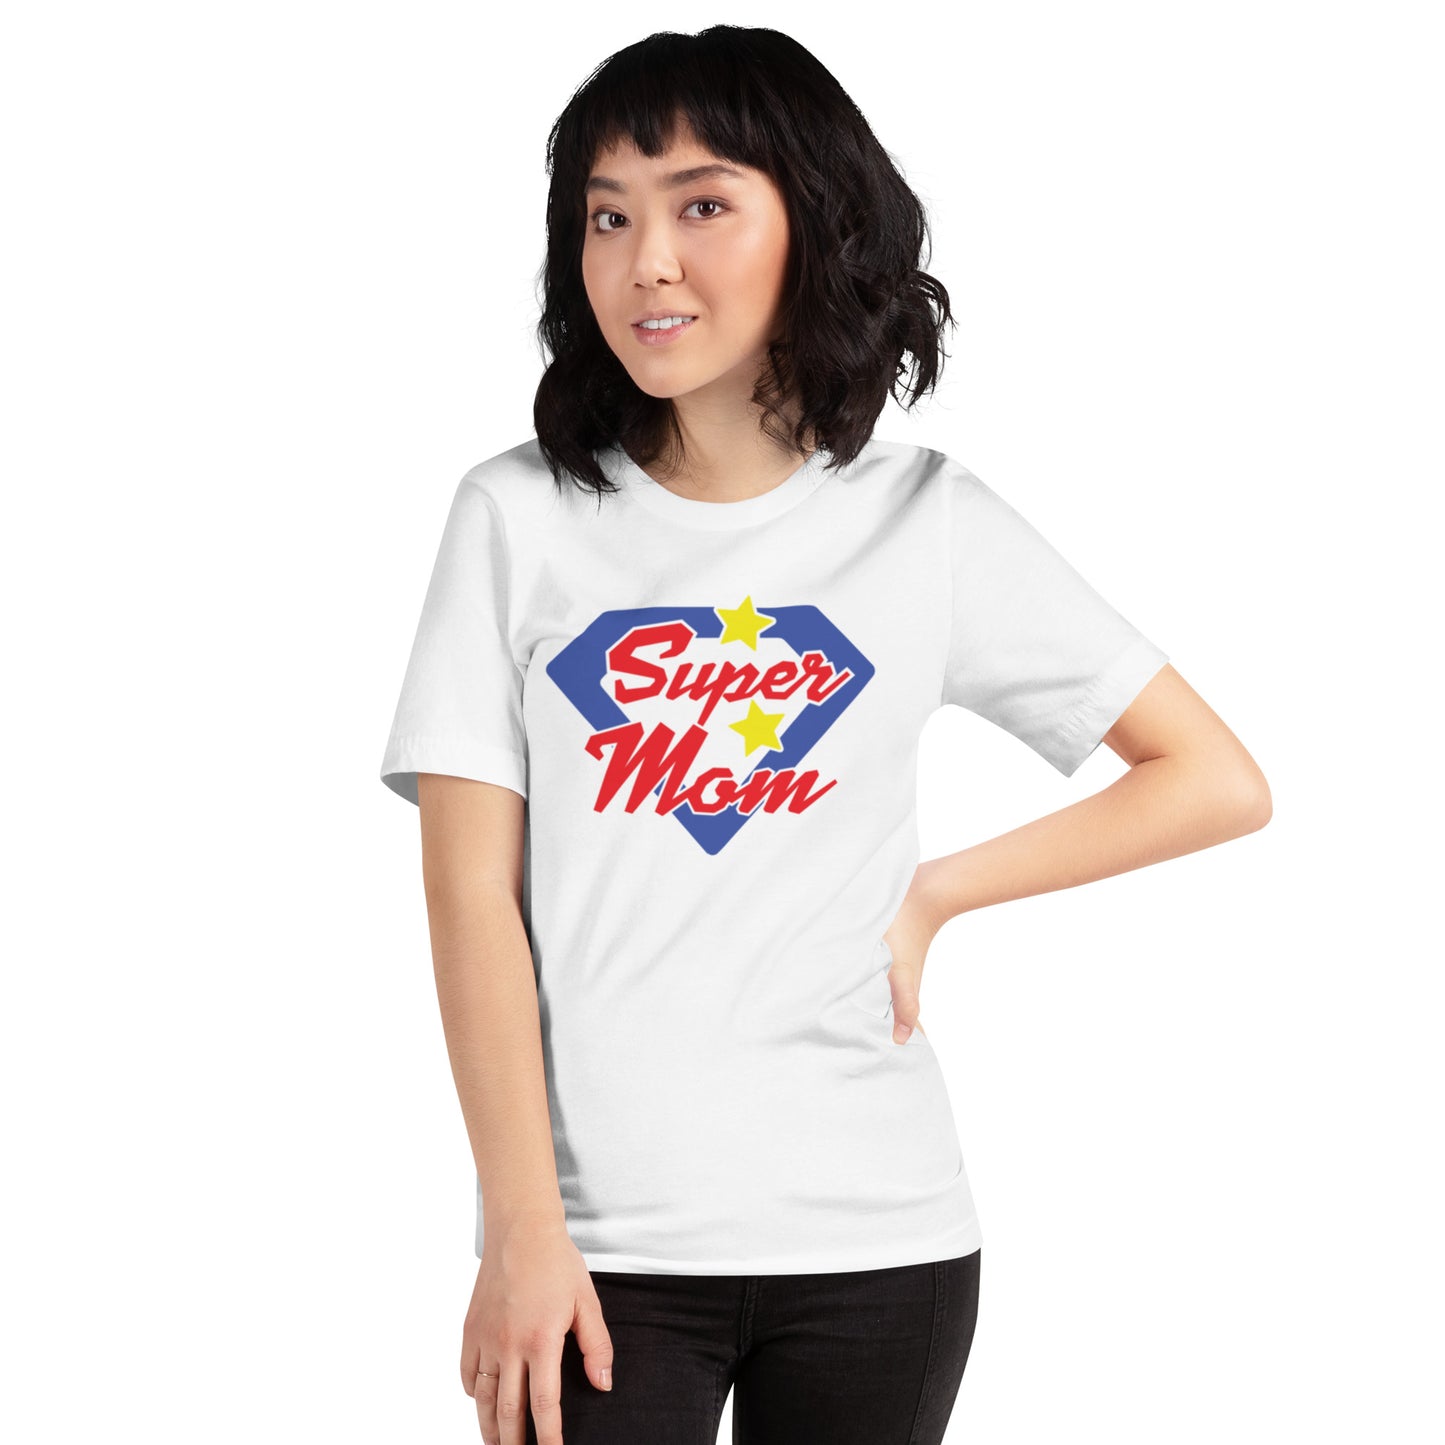 Super Mom Unisex t-shirt